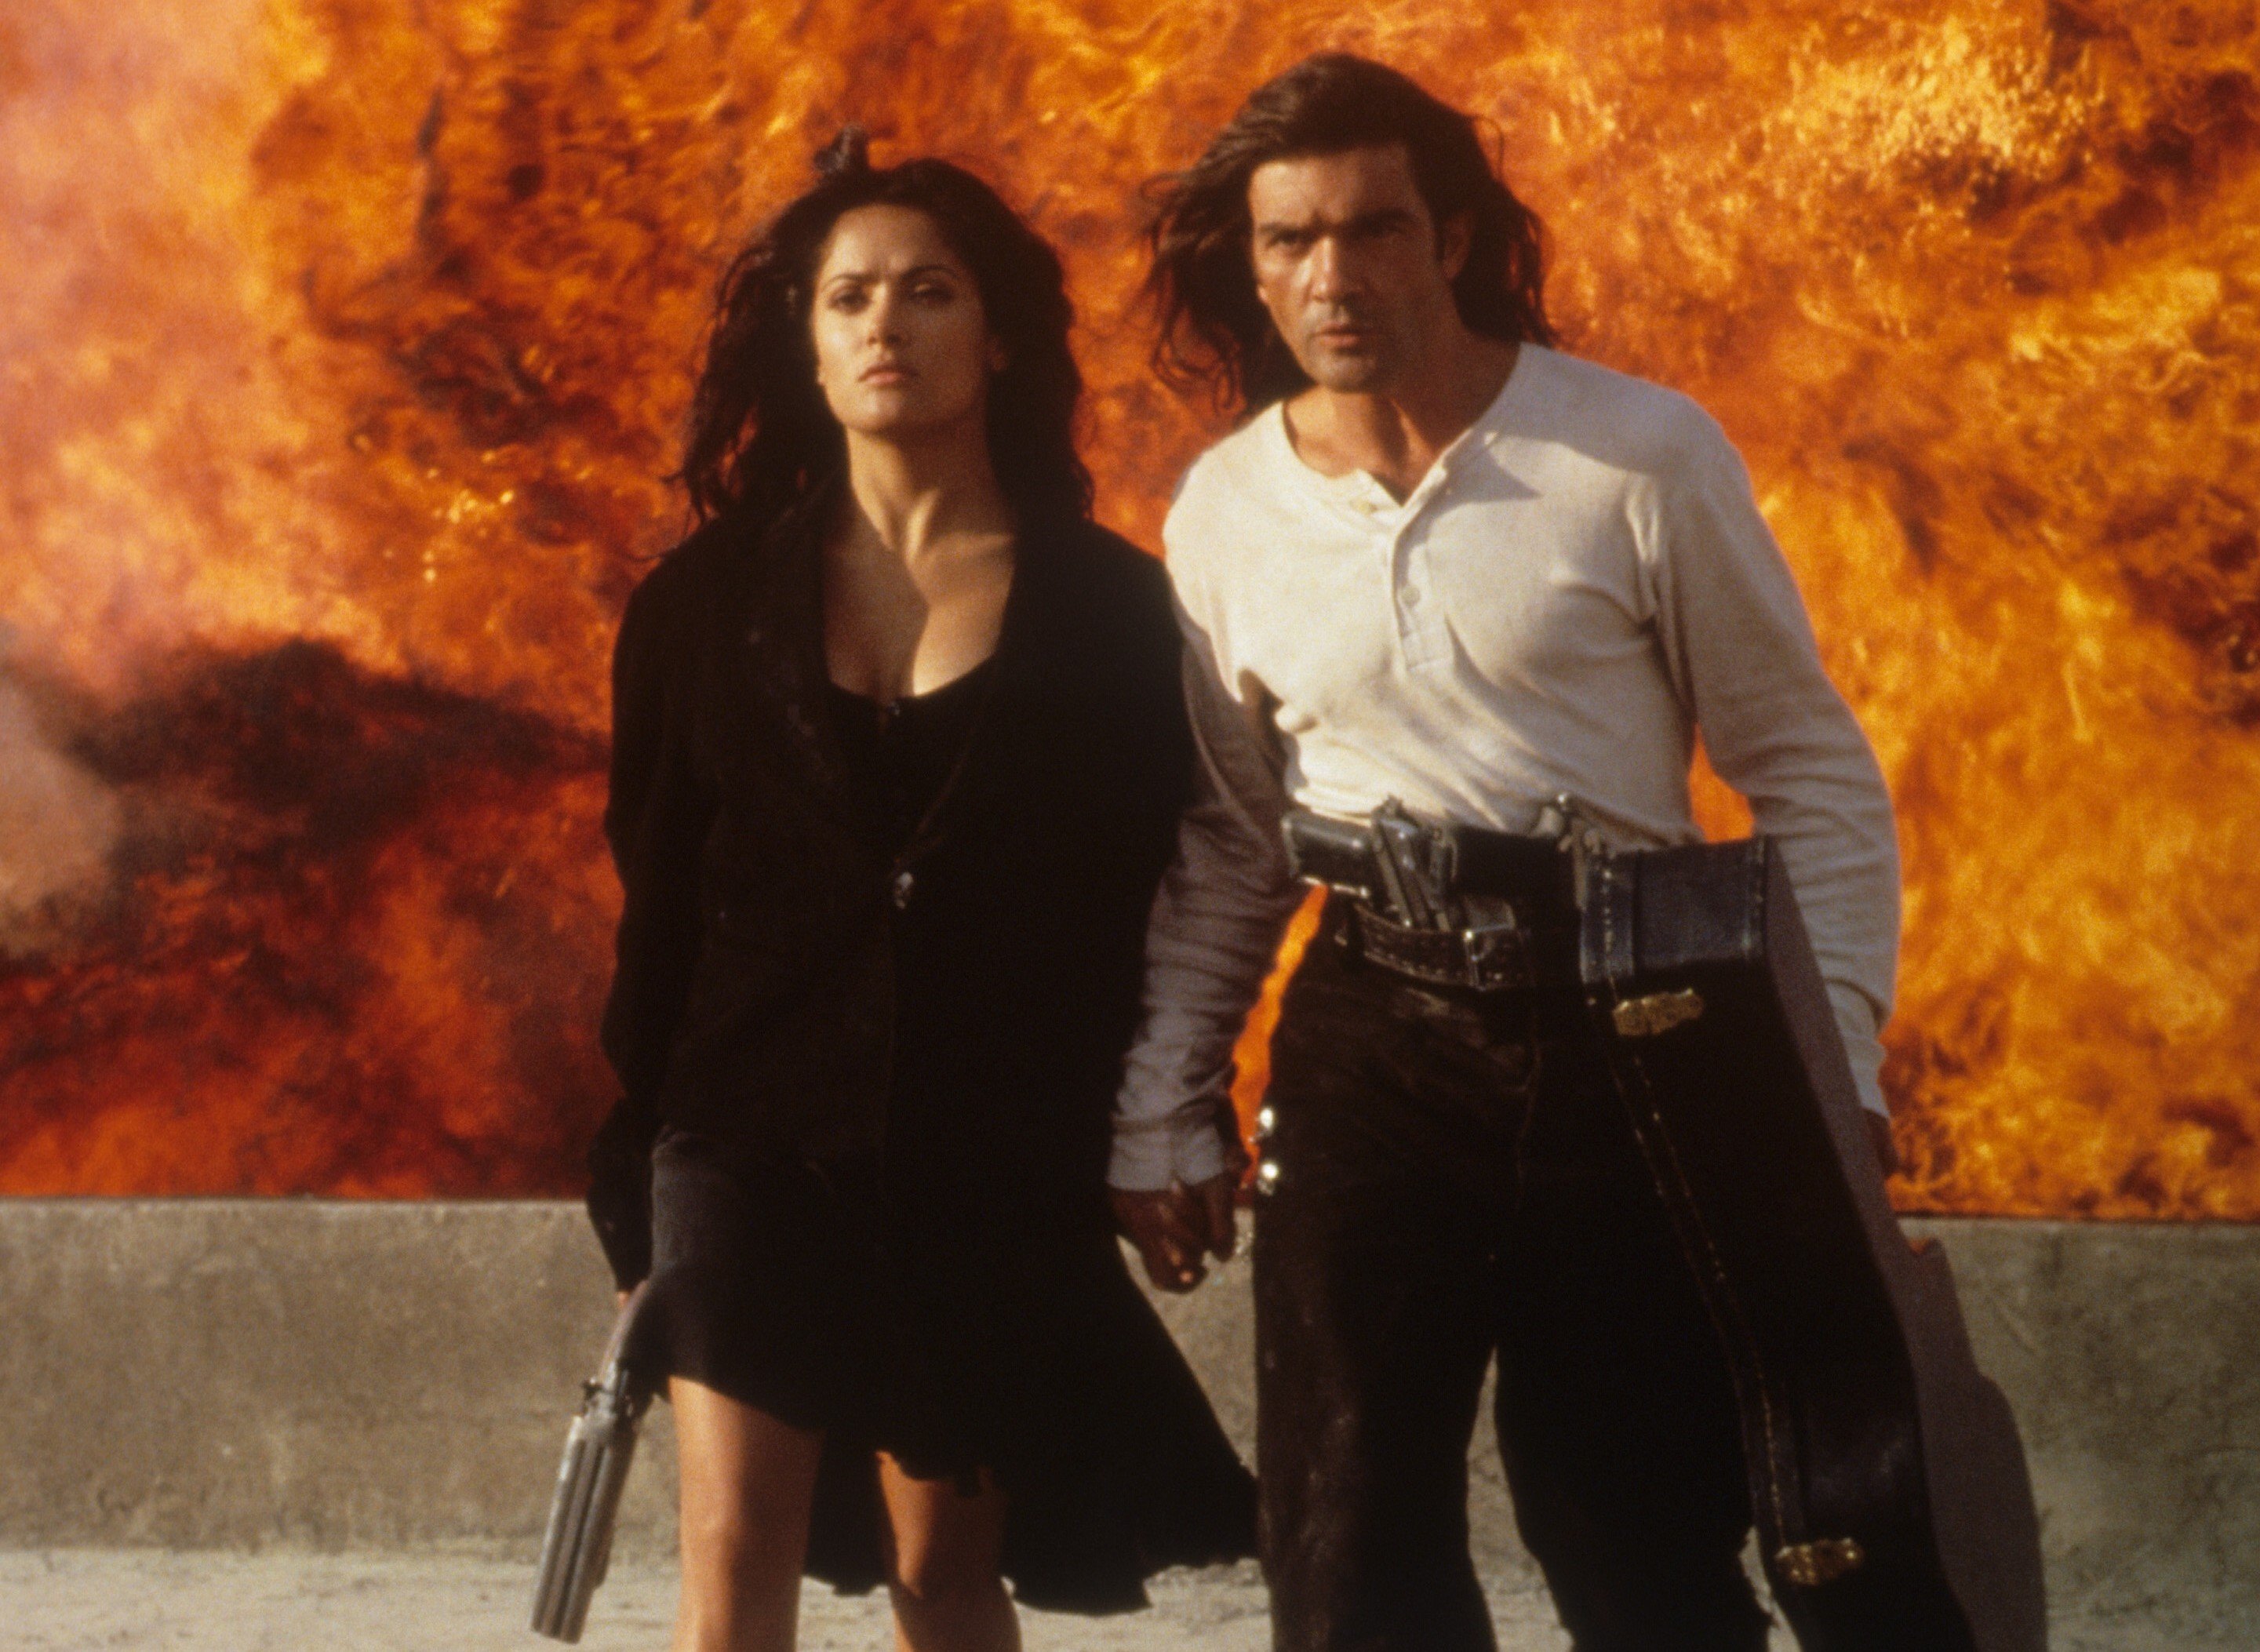 Antonio Banderas and Salma Hayek walking away from burning flames in scene from 'Desperado' 